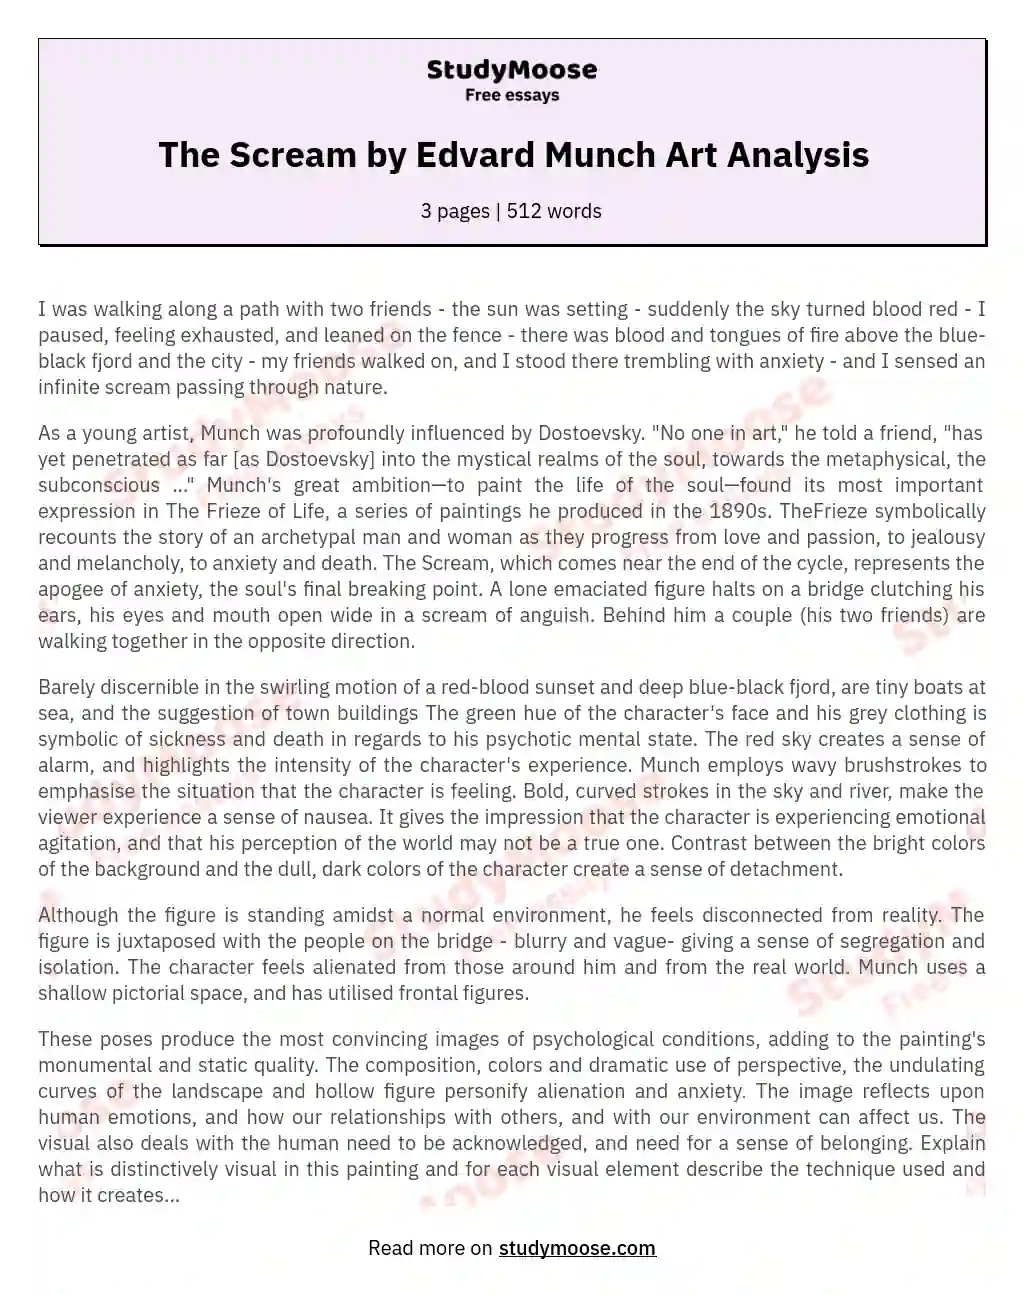 The Scream by Edvard Munch Art Analysis